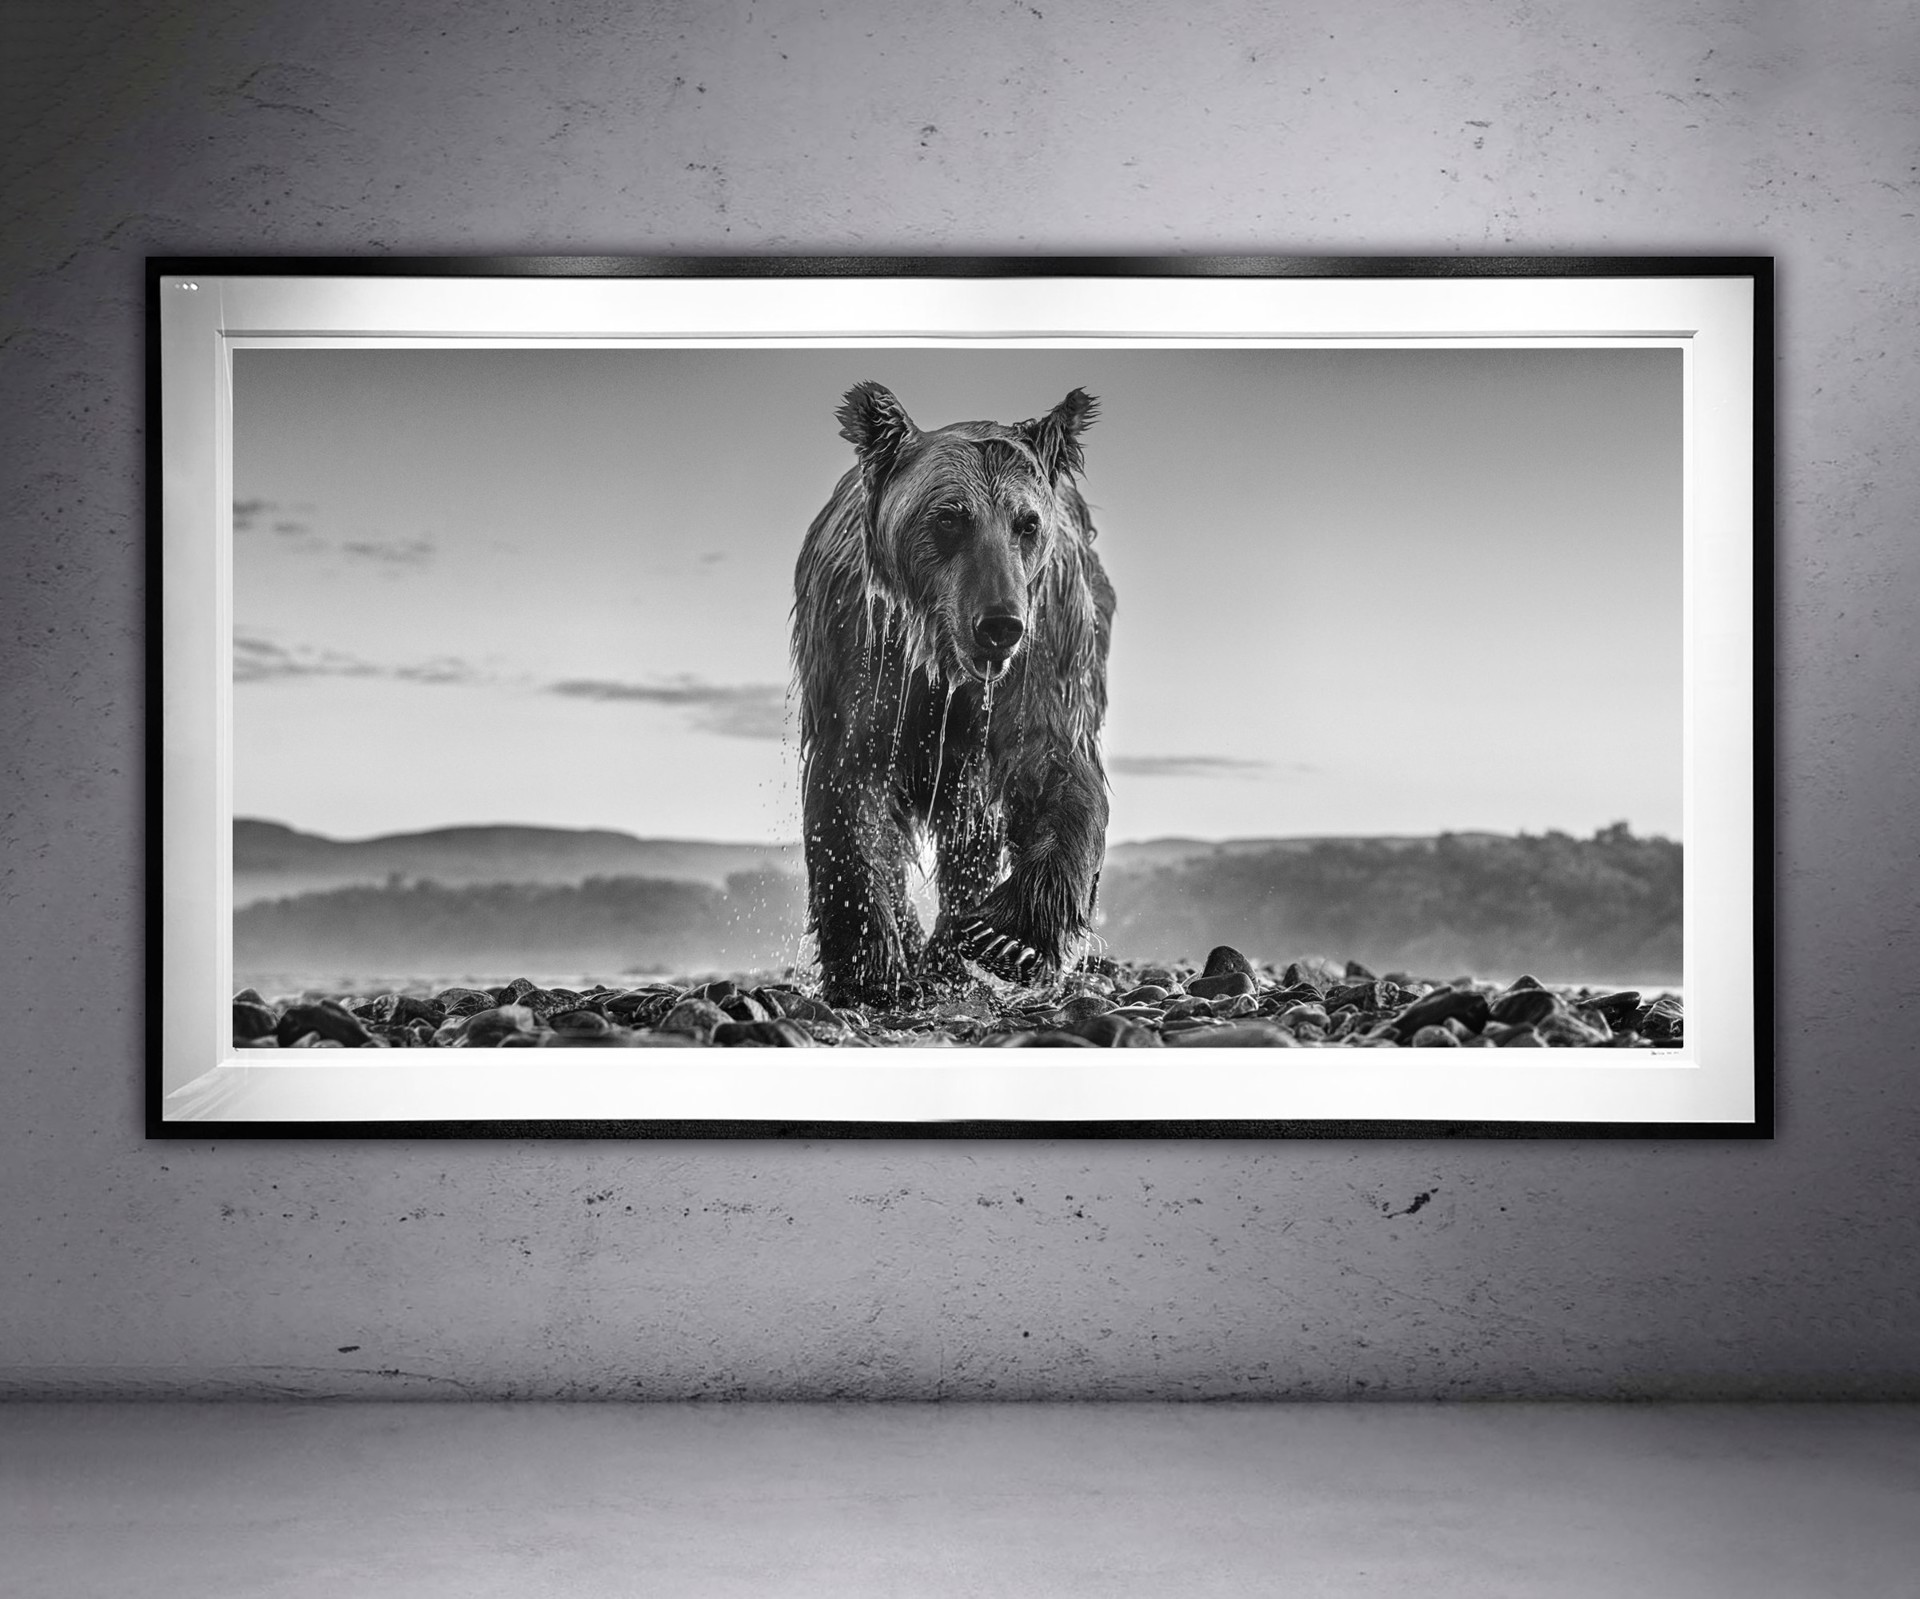 Bear Island by David Yarrow